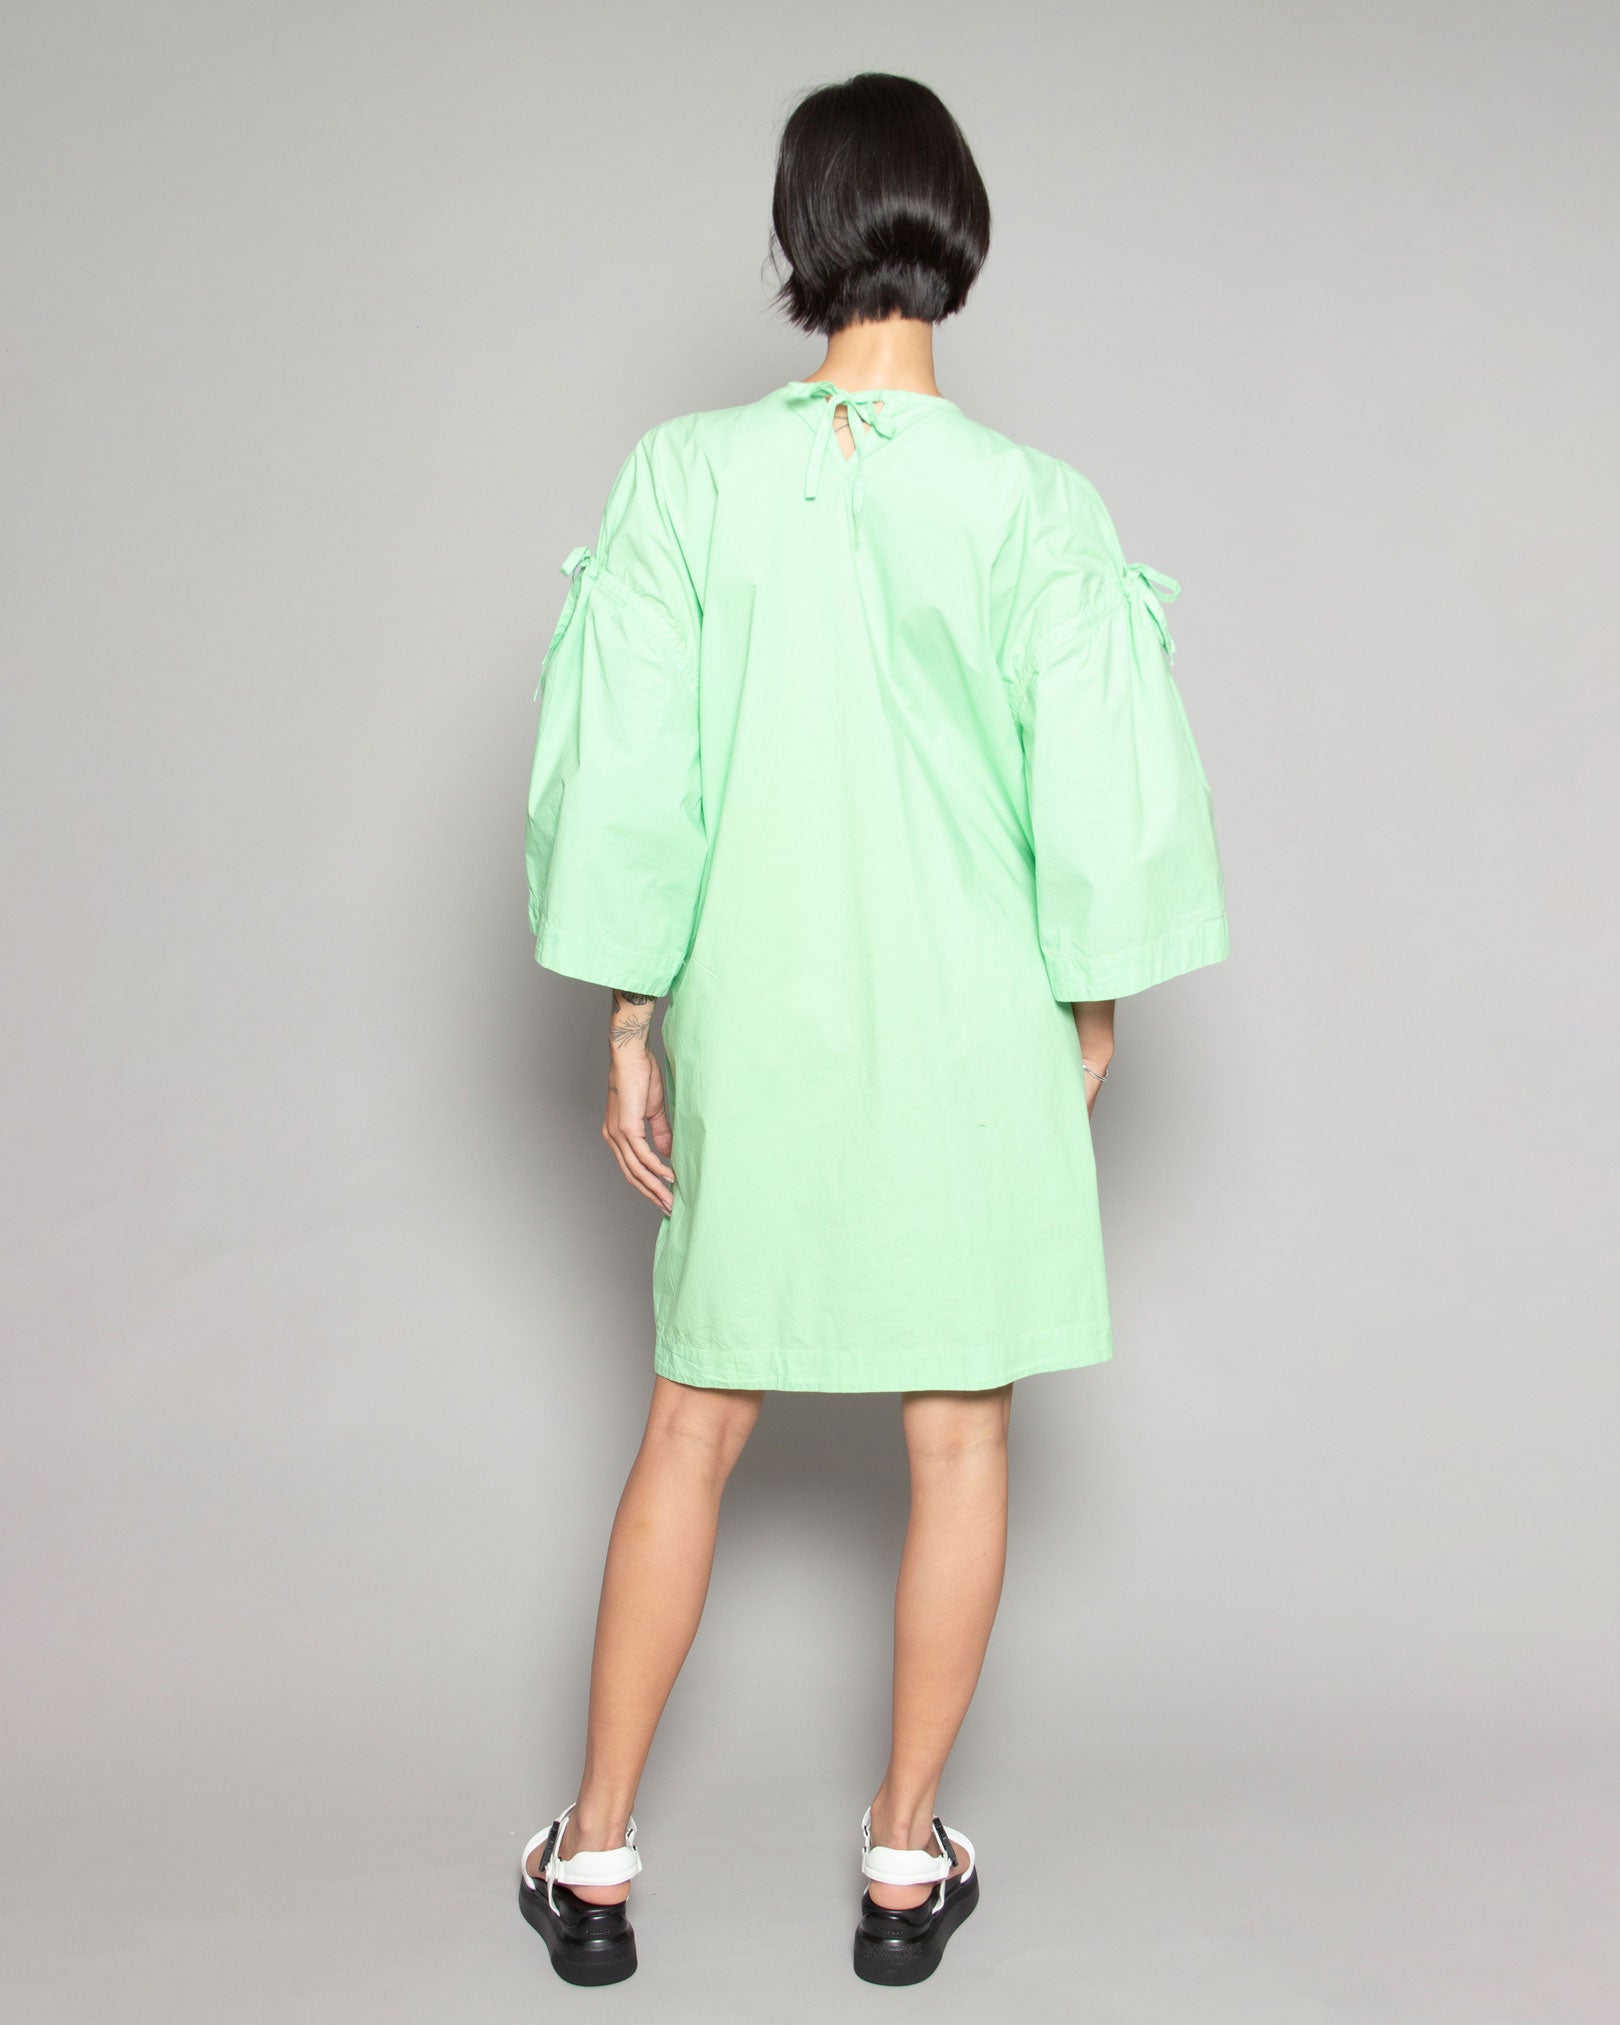 HENRIK VIBSKOV Tapas Dress in Summer Green available at Lahn.shop